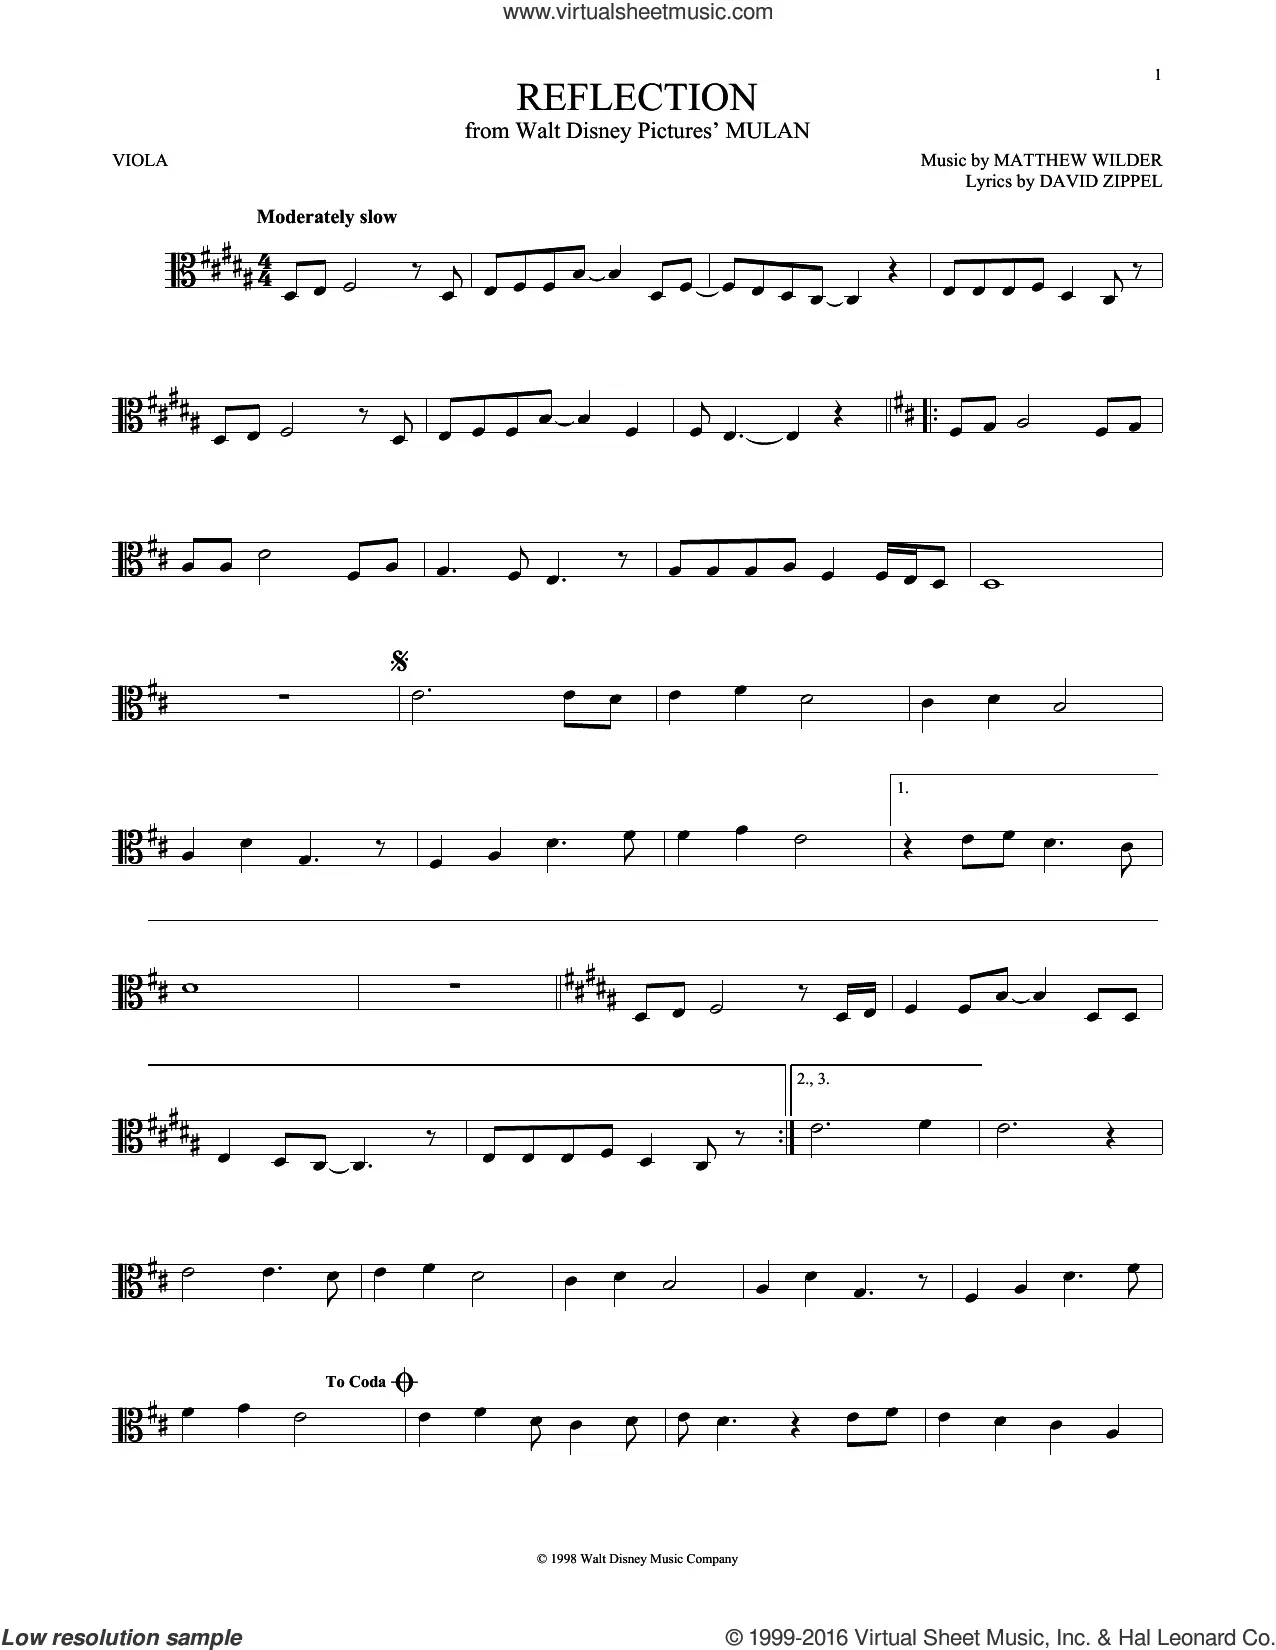 Download Digital Sheet Music Of Reflection For Viola